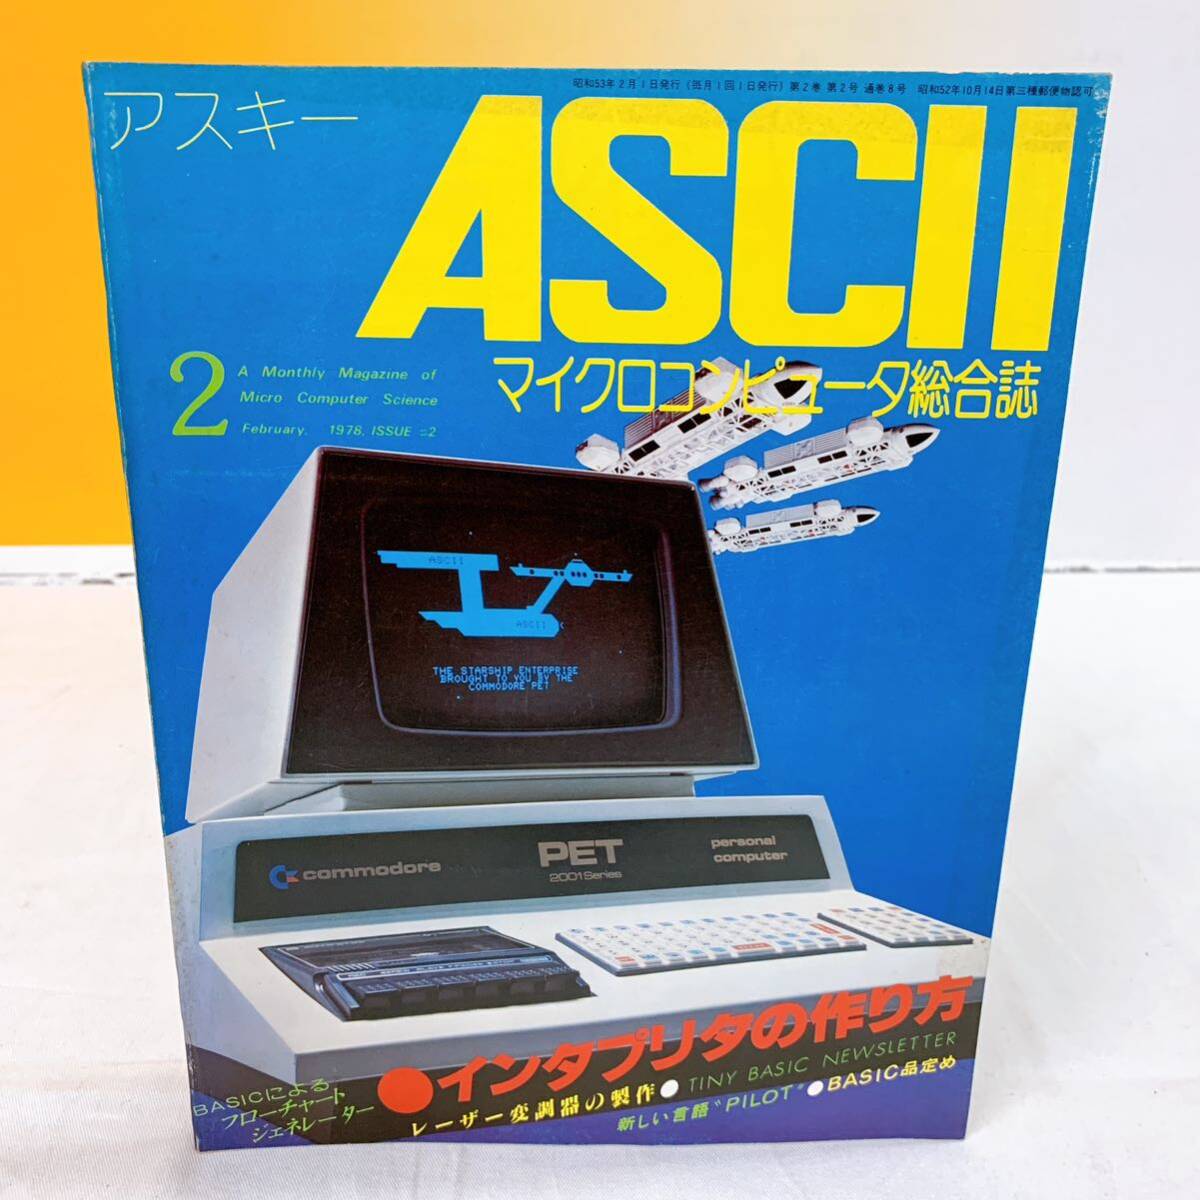 R5-W5/13 ASCII ASCII 1978 год 2 месяц номер микро компьютер объединенный журнал inter plita Laser менять style контейнер 